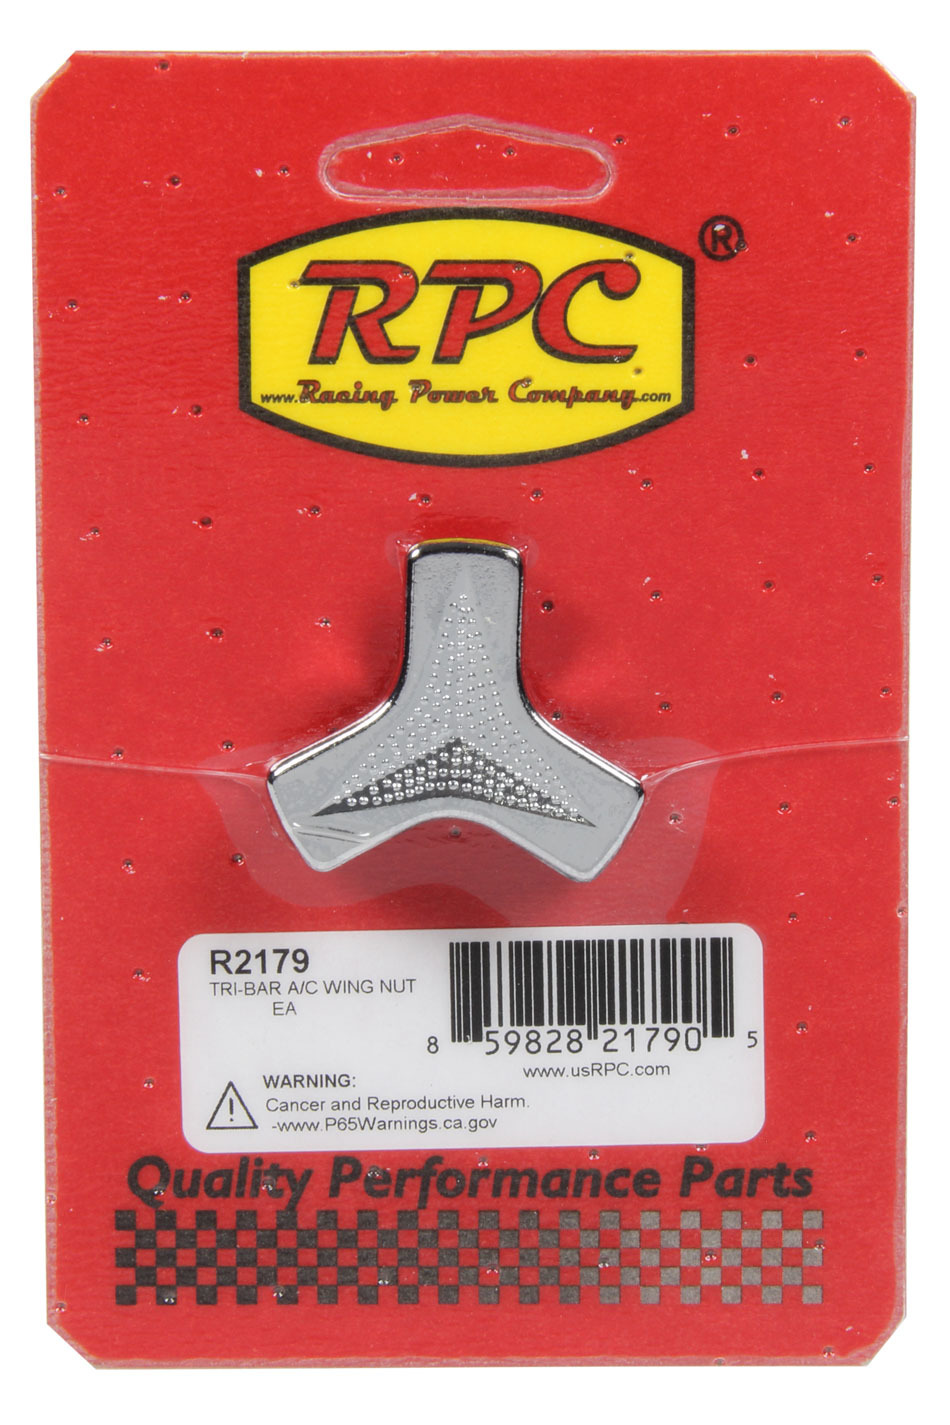 Racing Power Company R2179 Air Cleaner Nut, Tri-Bar, 1/4-20 in Thread, Steel, Black / Chrome, Each